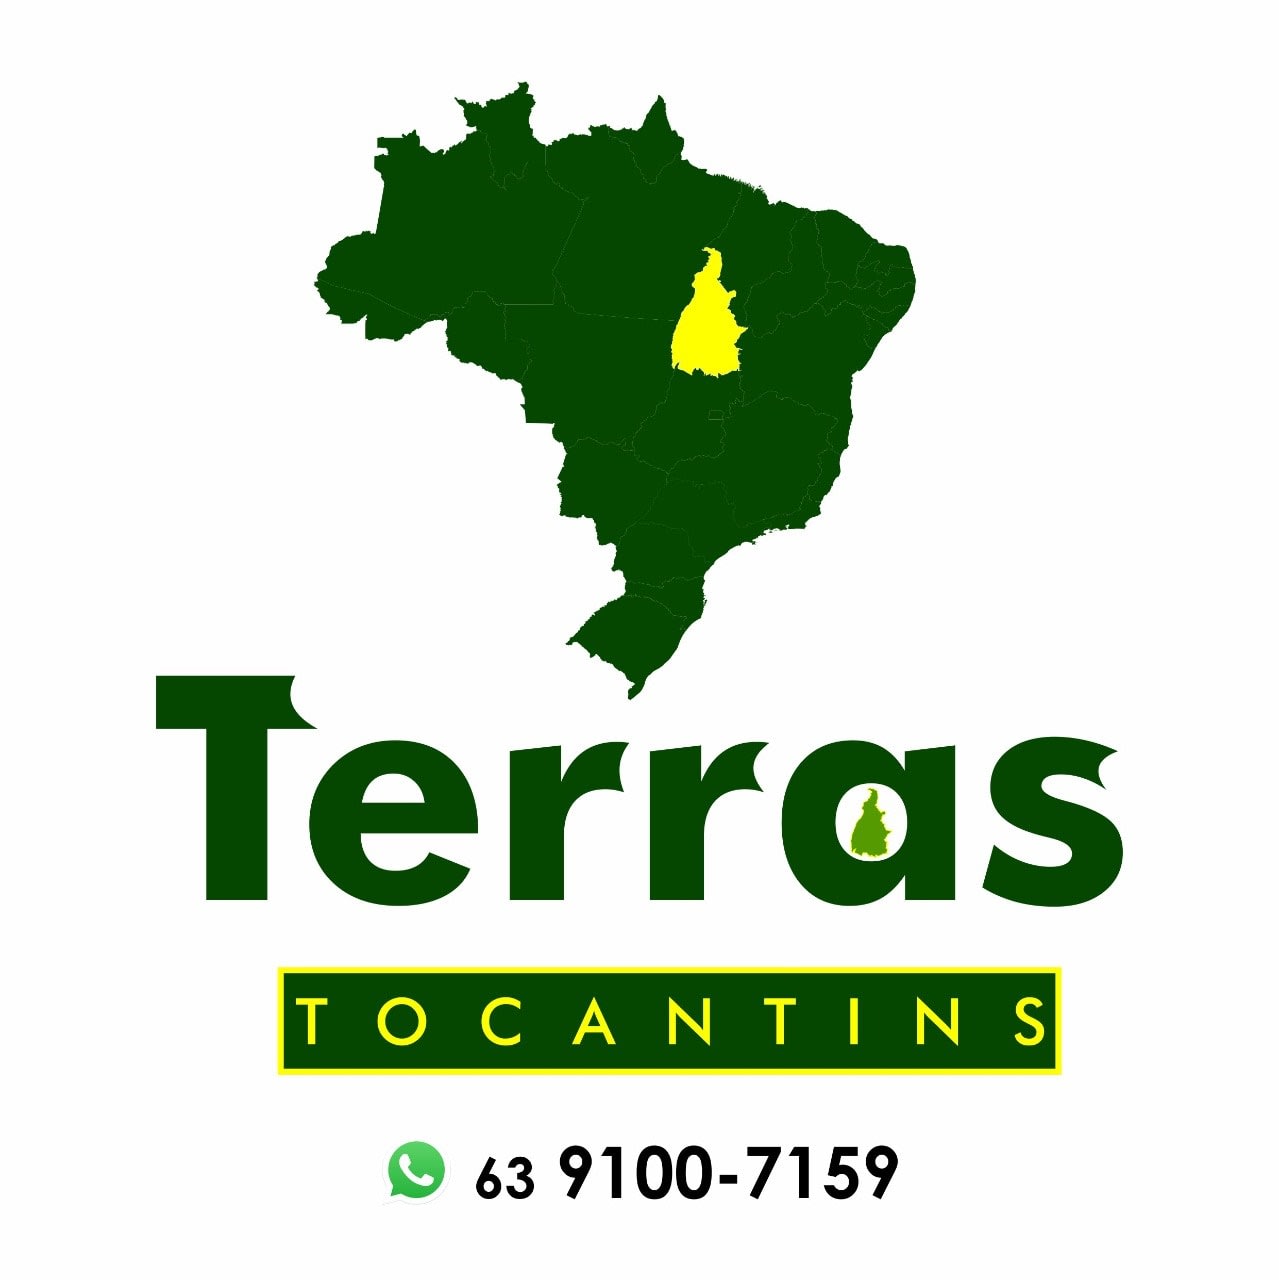 Terras Tocantins